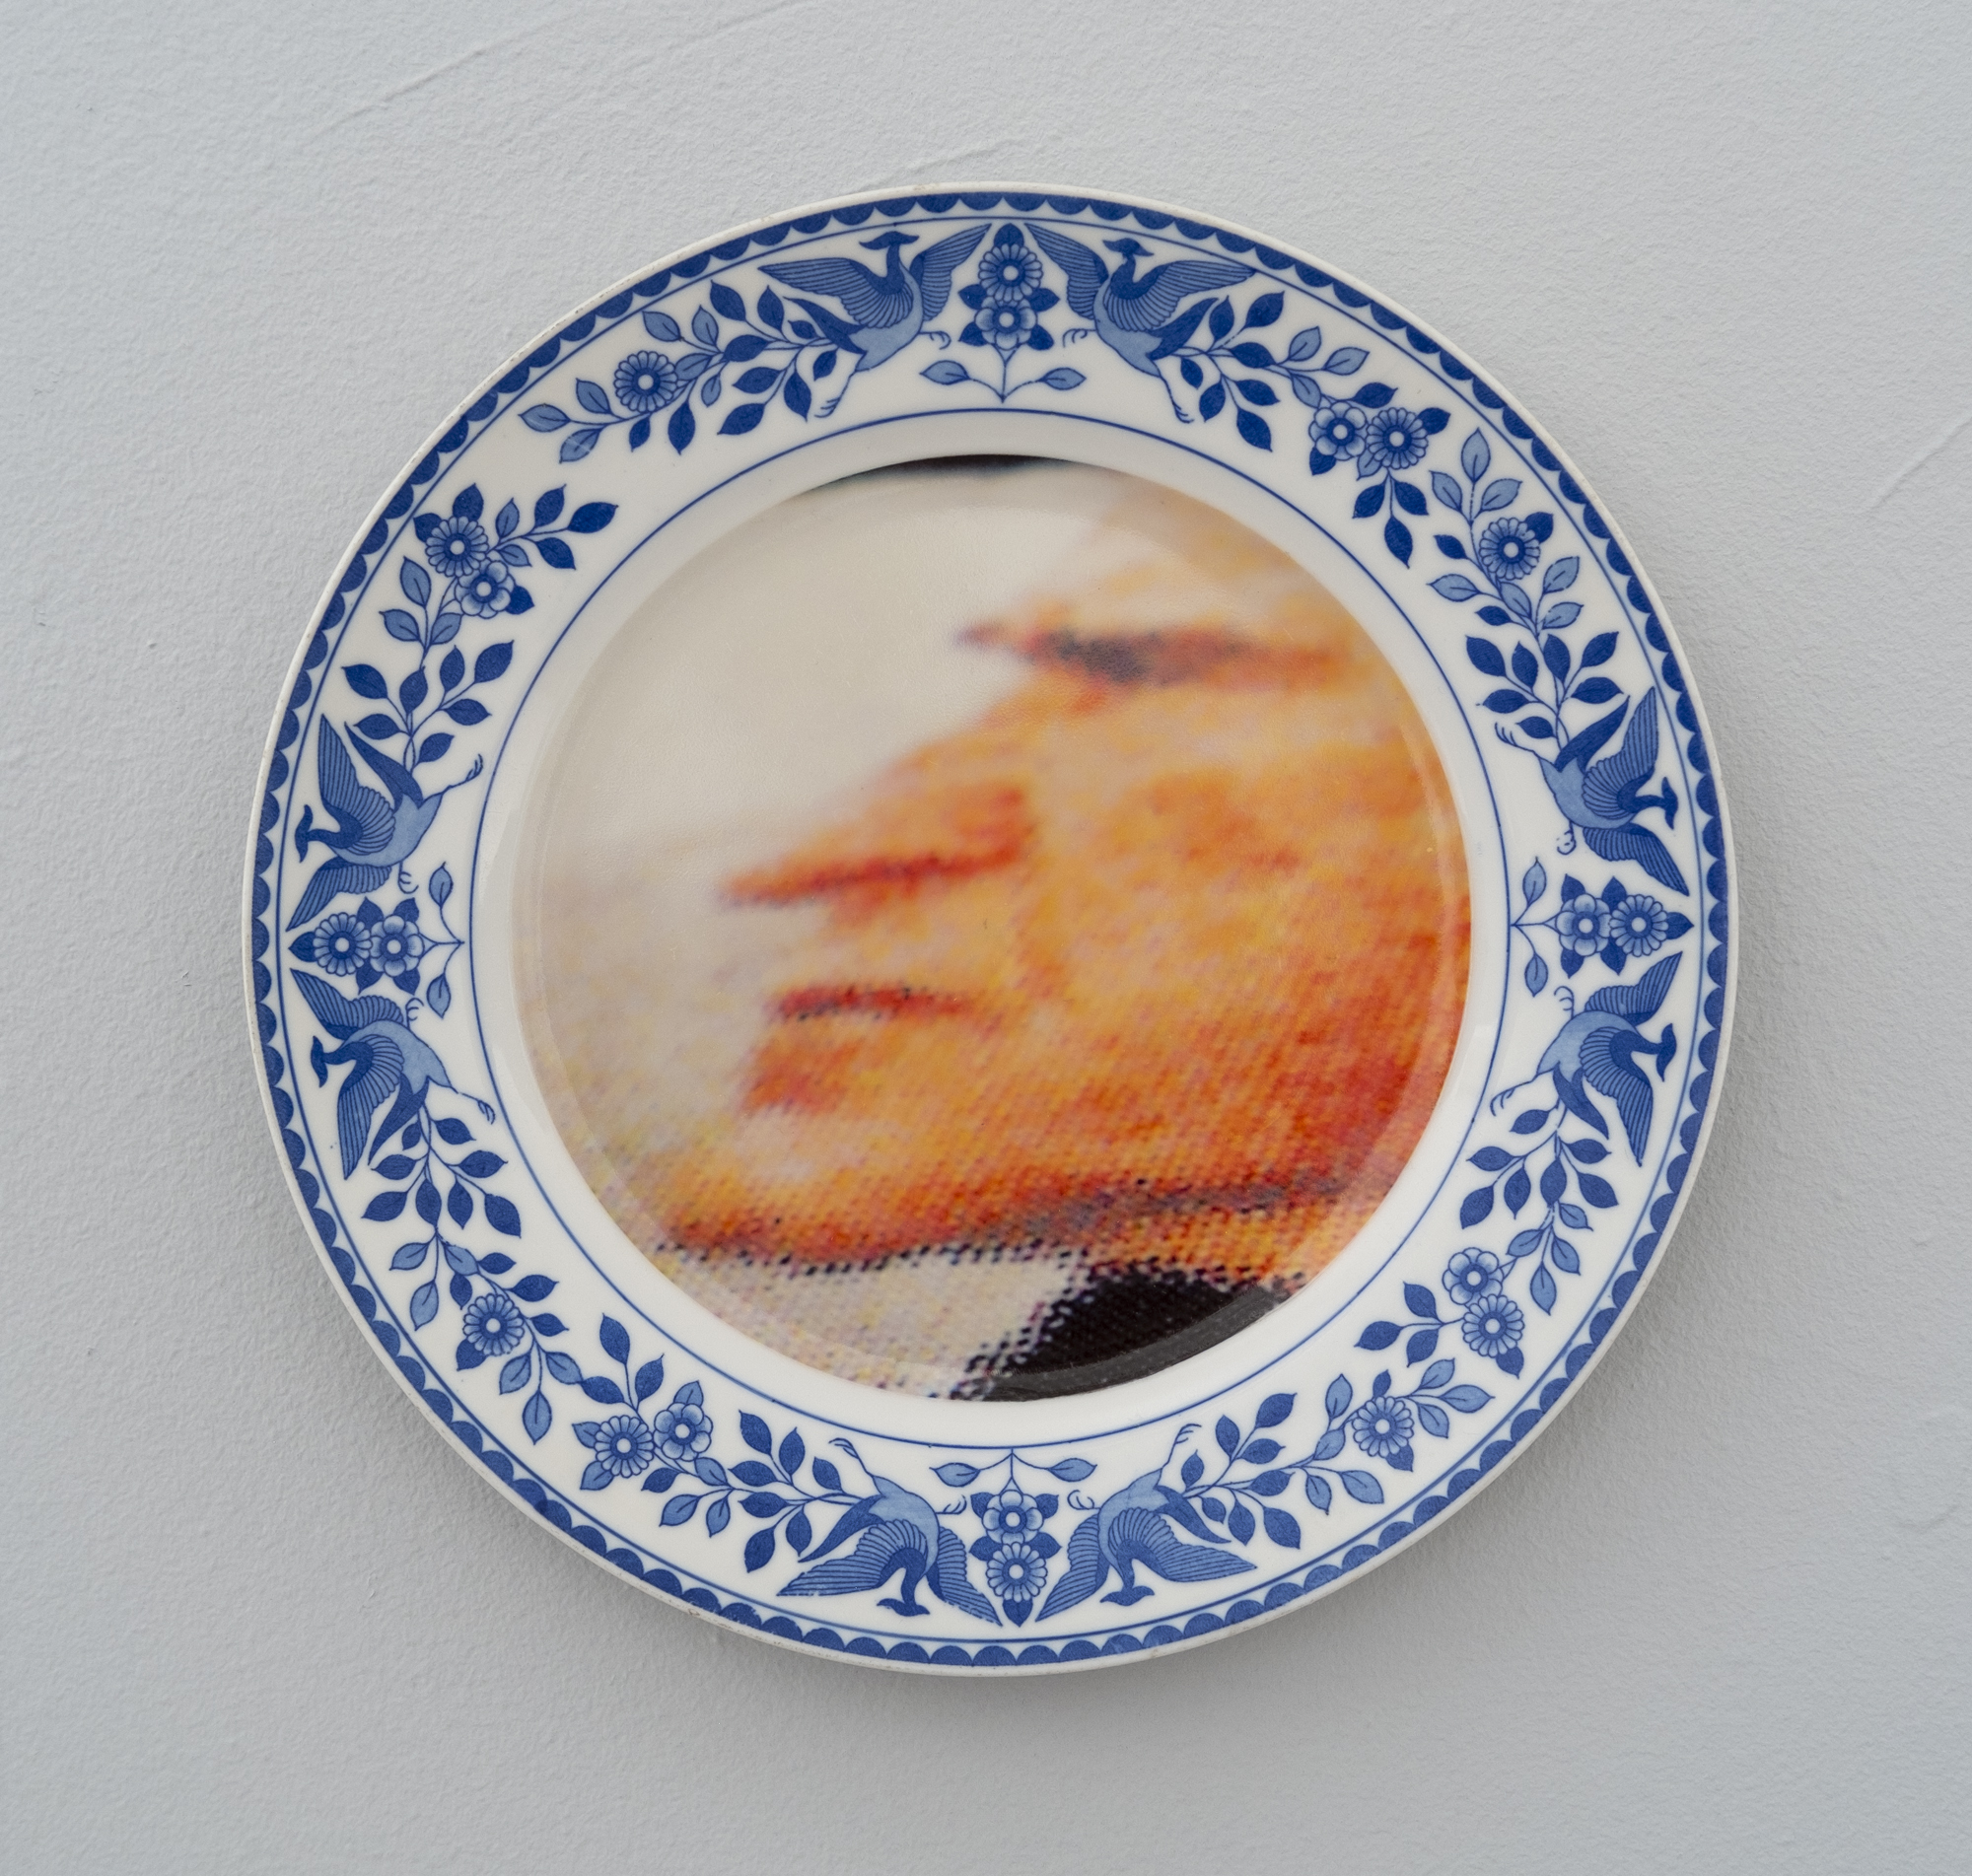  Bean Gilsdorf,  George H. W. Bush , 2018, Ceramic plate, 9.75 inch diameter 